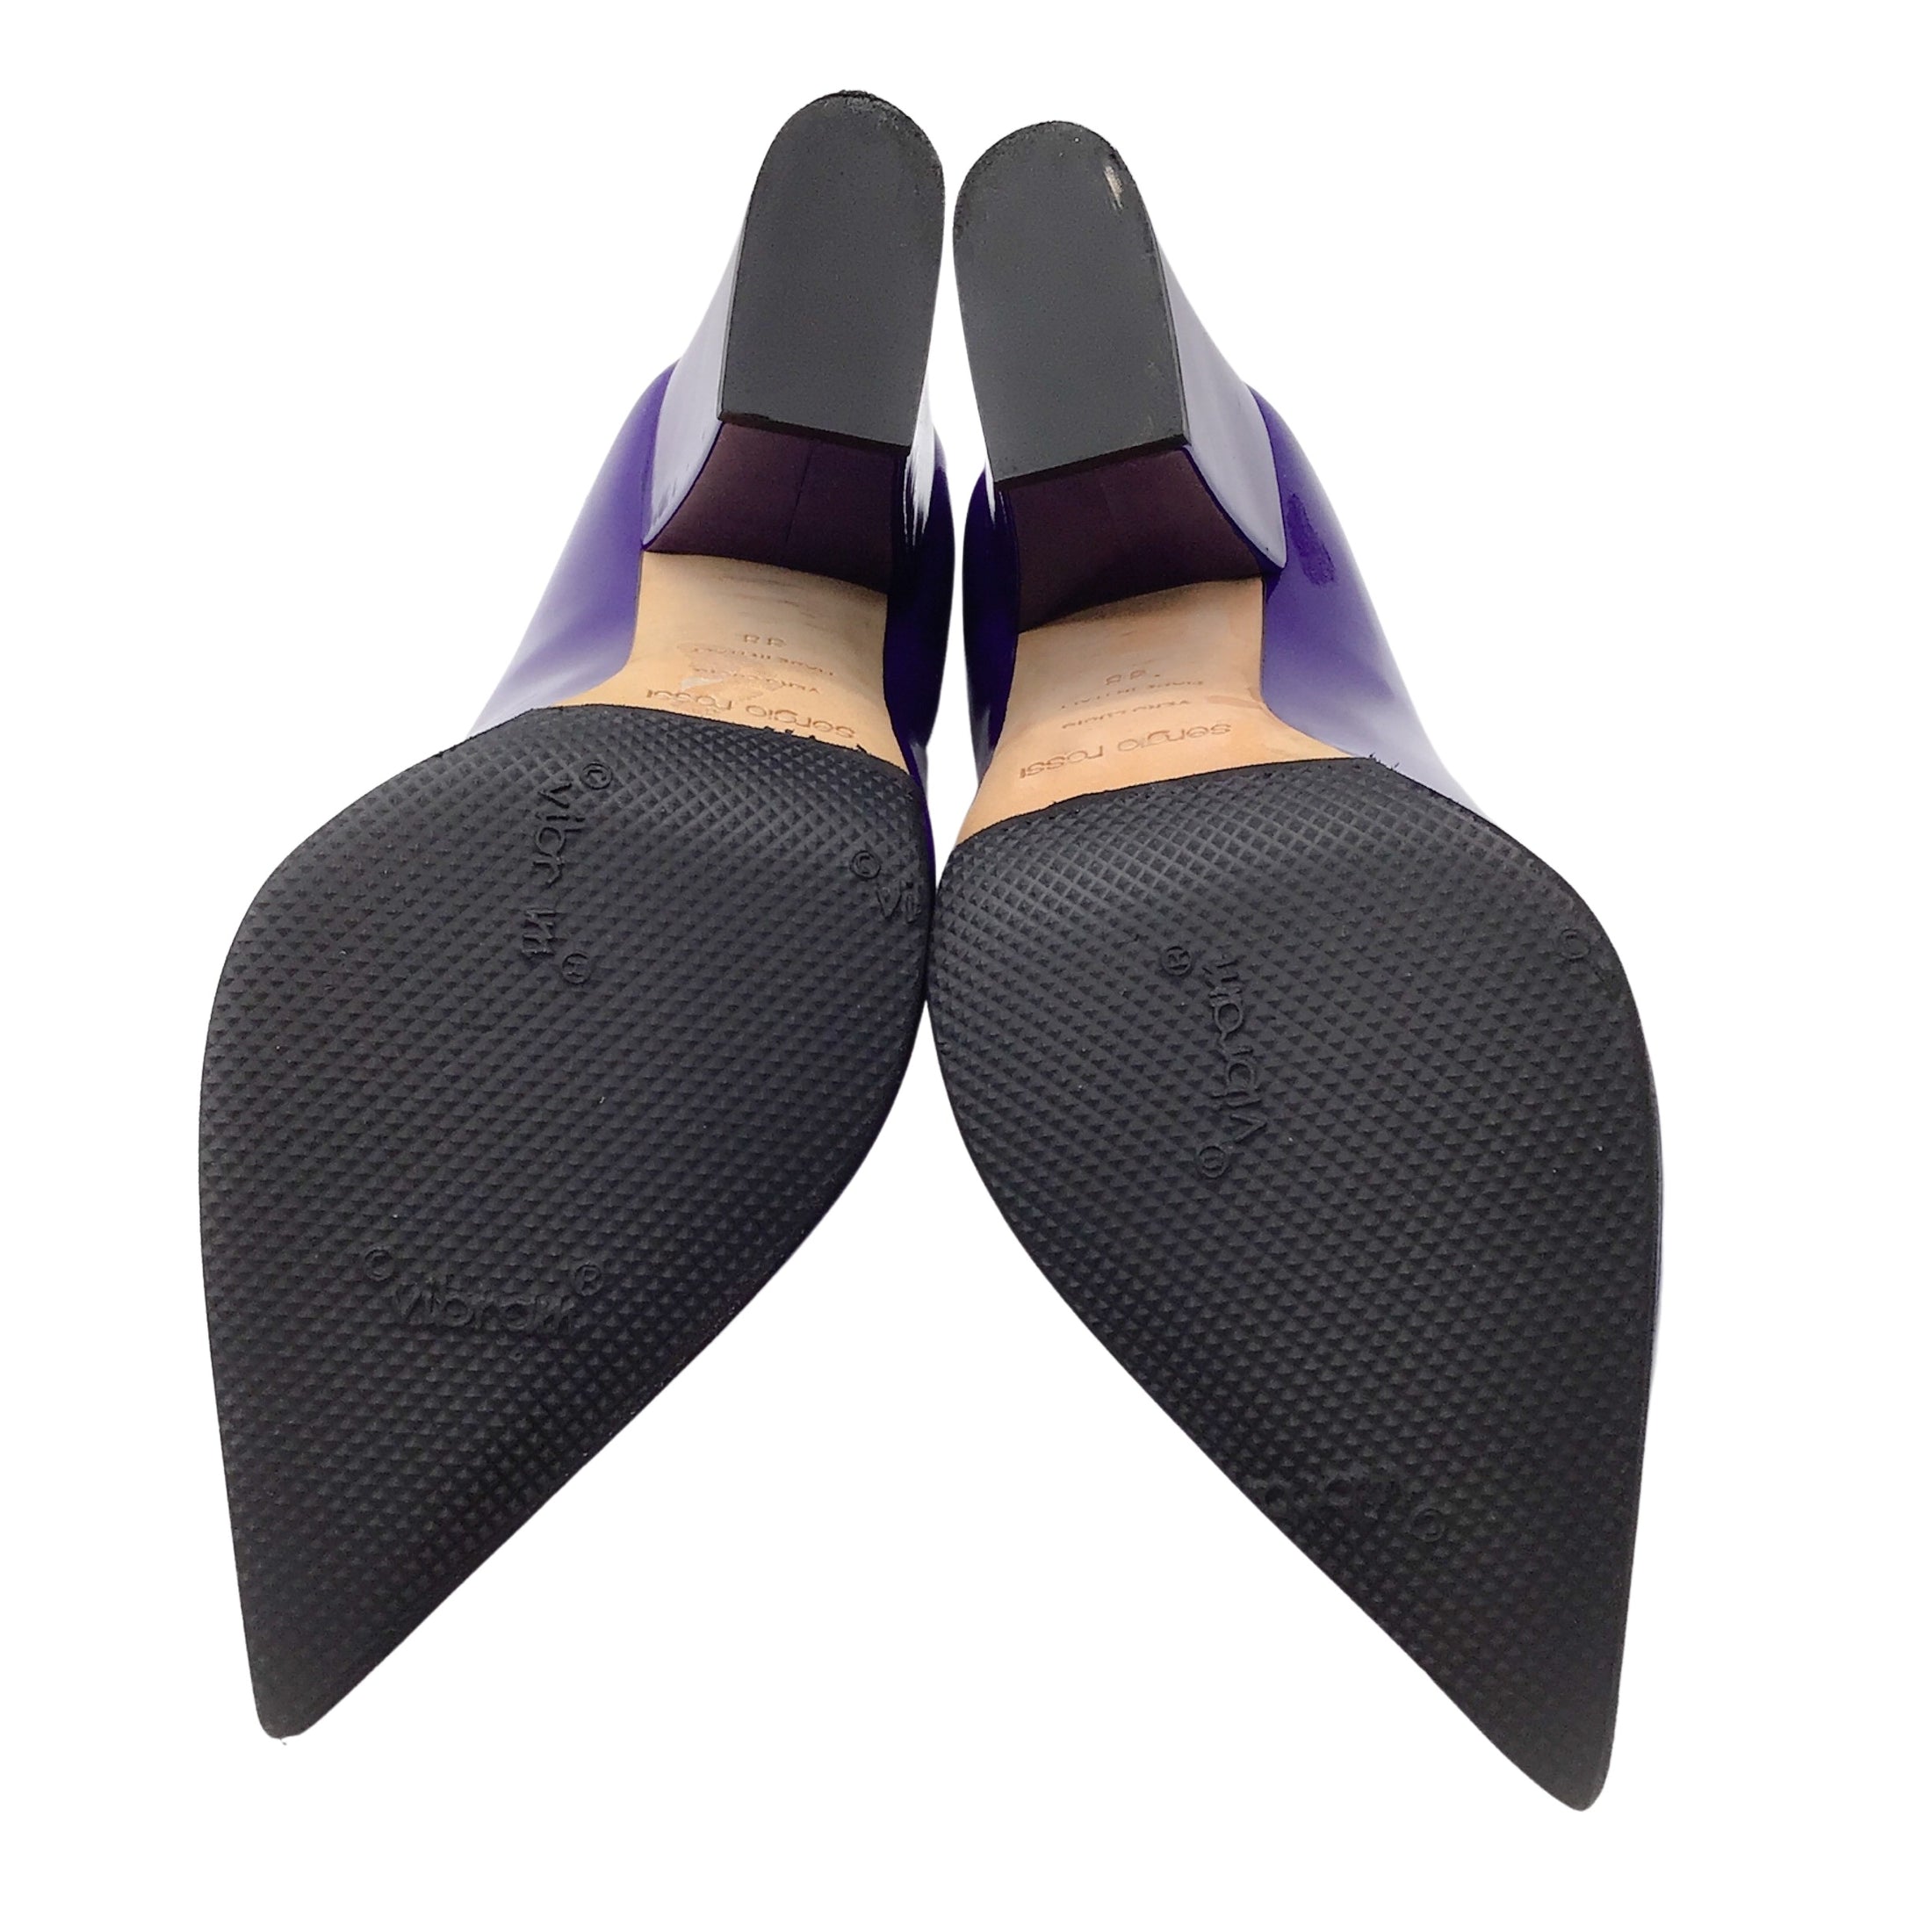 Sergio Rossi Purple Pointed Toe Block Heel Patent Leather Pumps